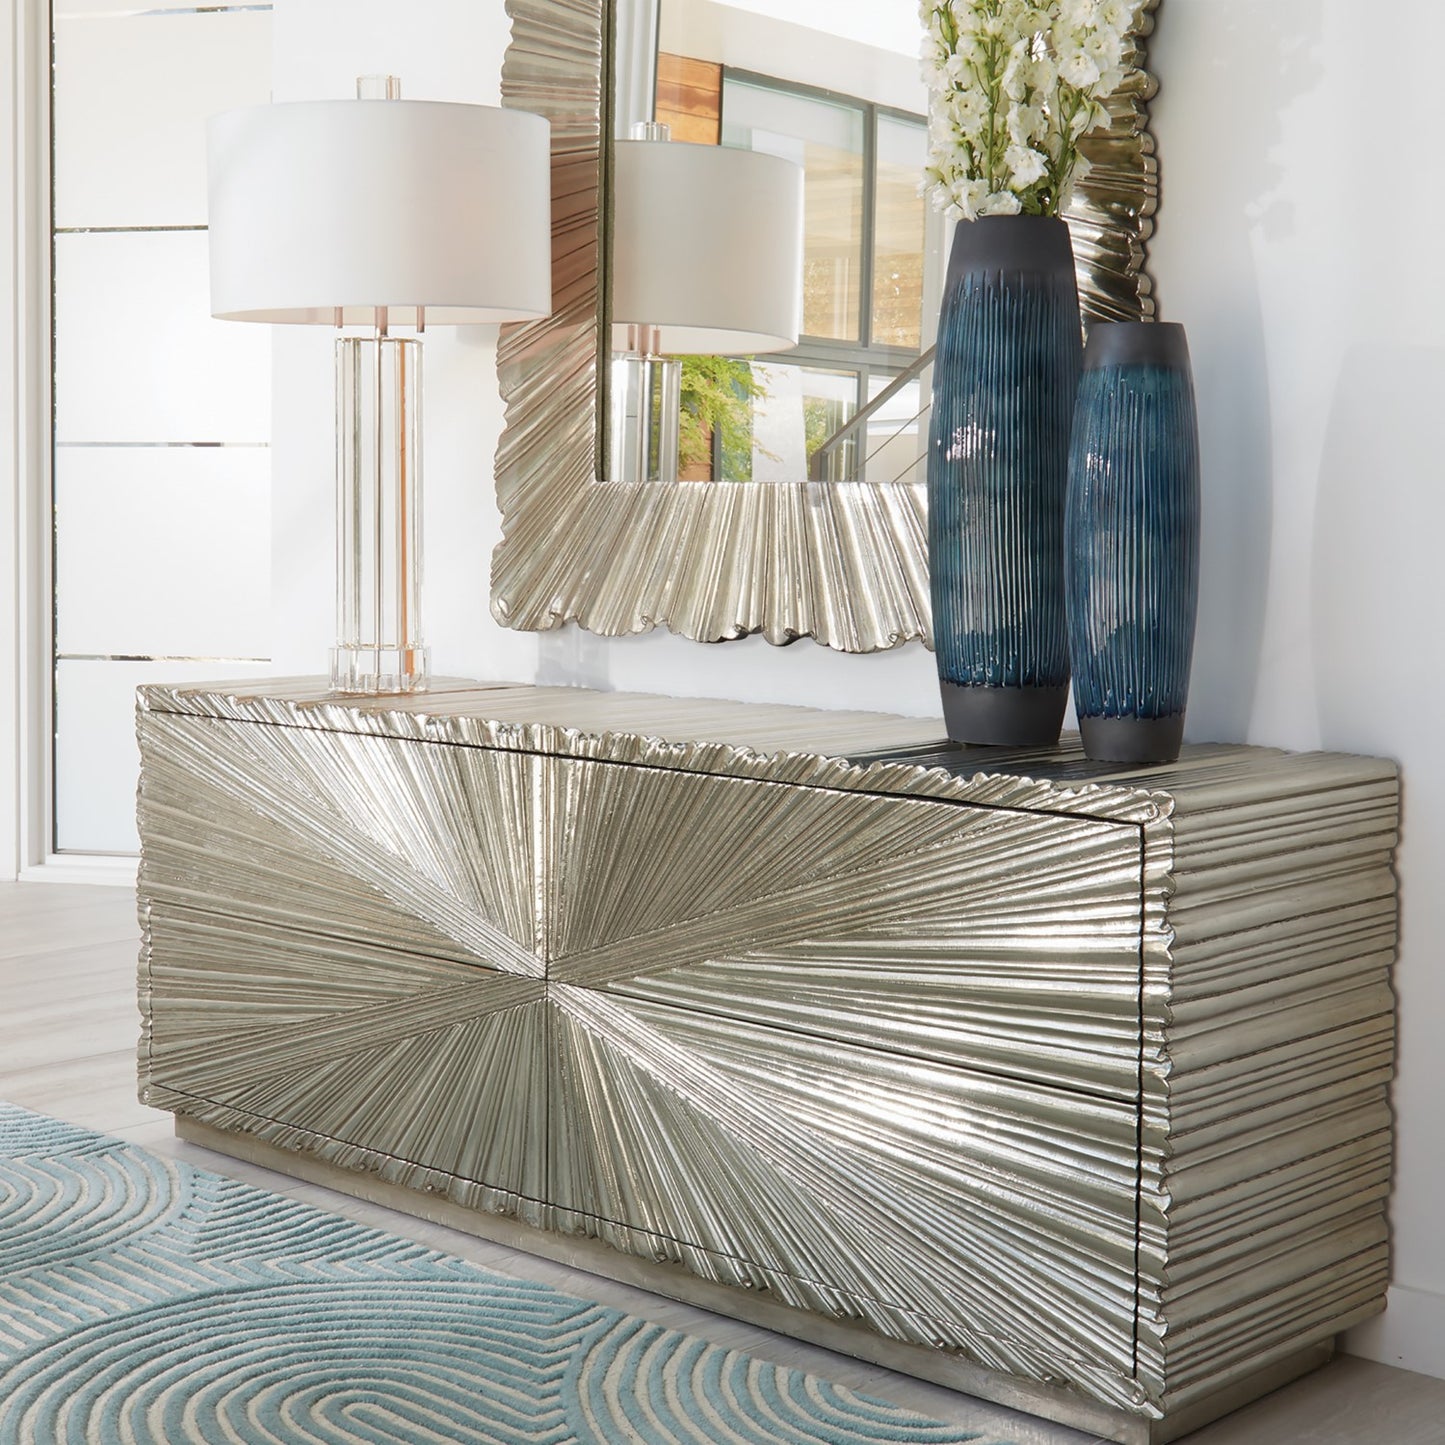 Fluted Crystal Column Table Lamp - Grats Decor Interior Design & Build Inc.